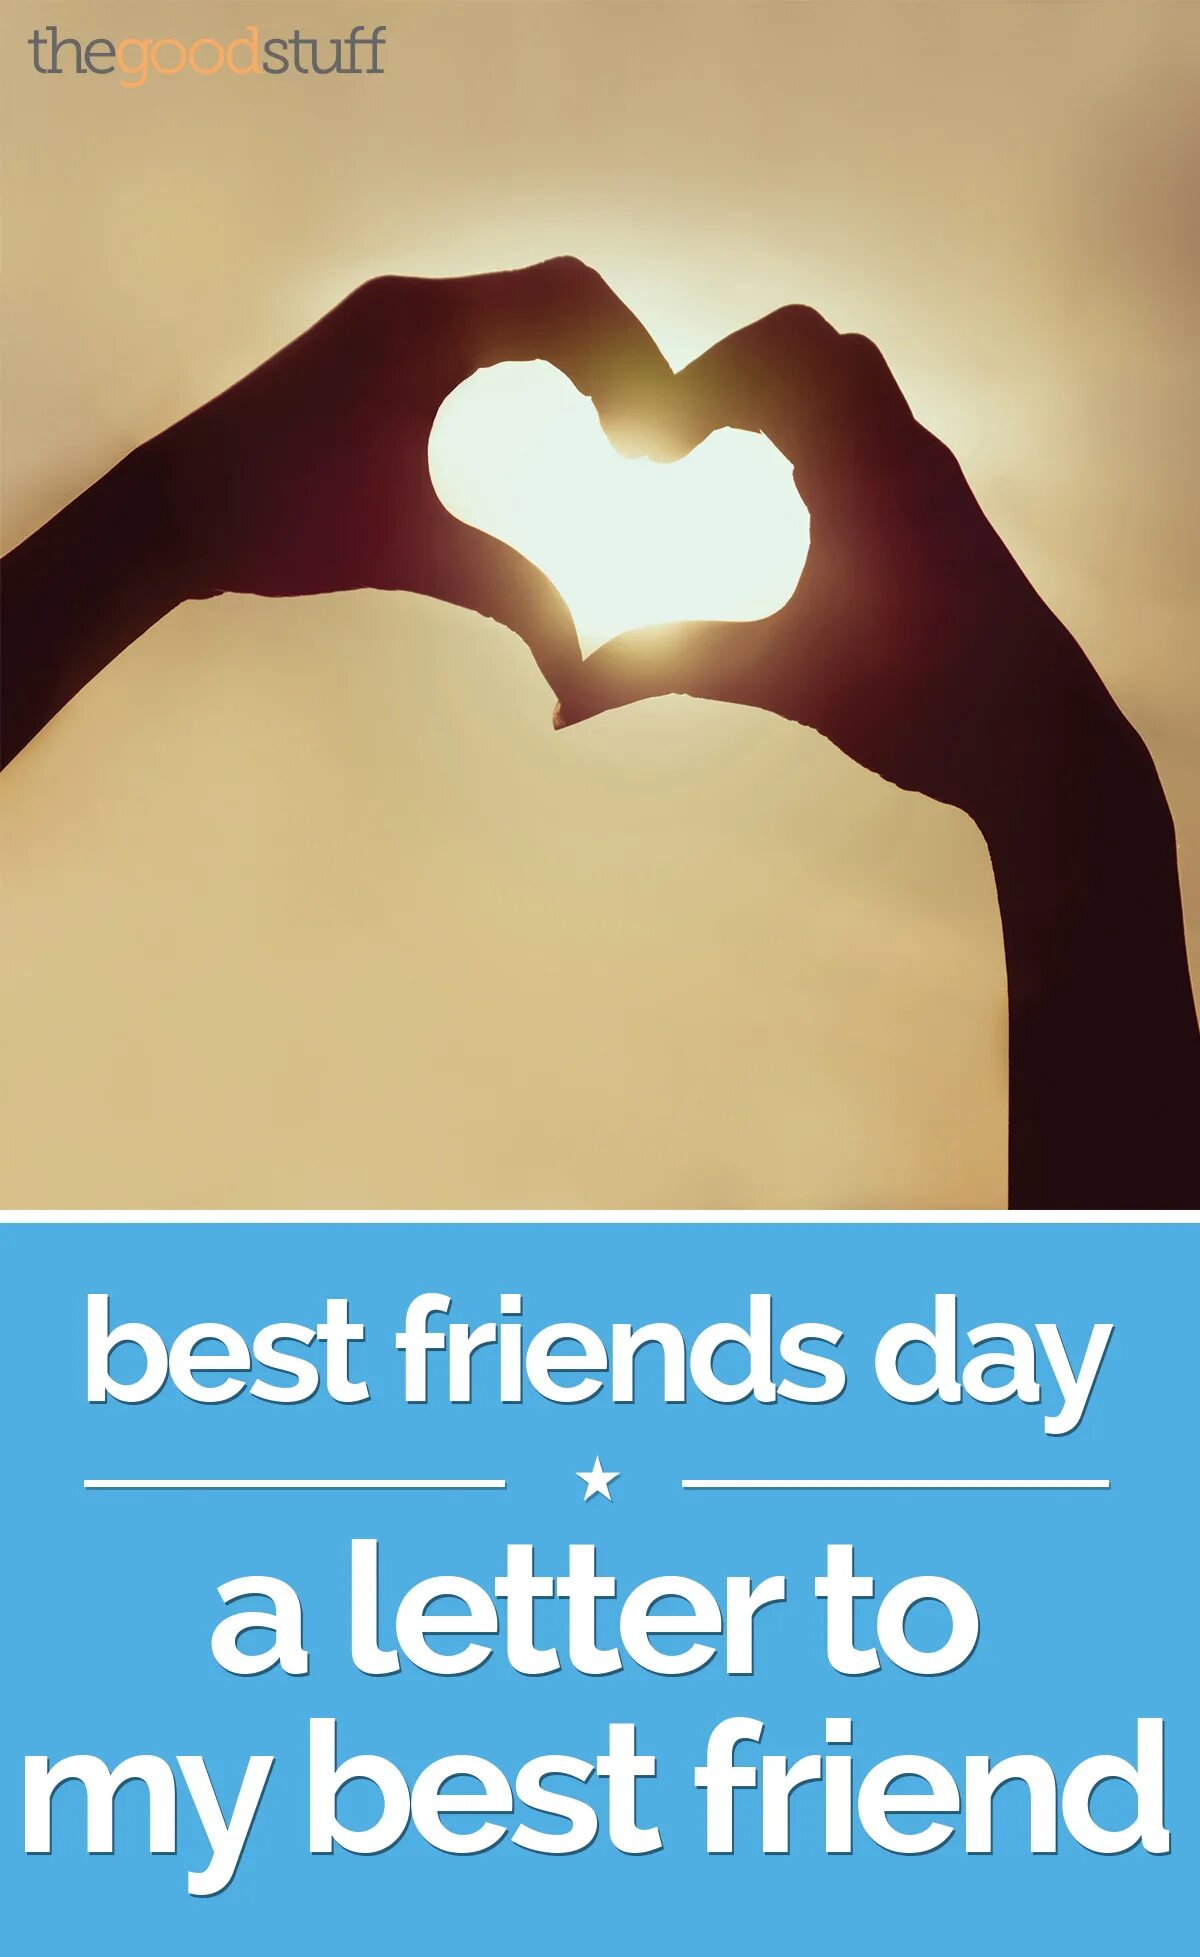 Friends Day. Best friends Day. National best friends Day. My friends. Best friends обновление